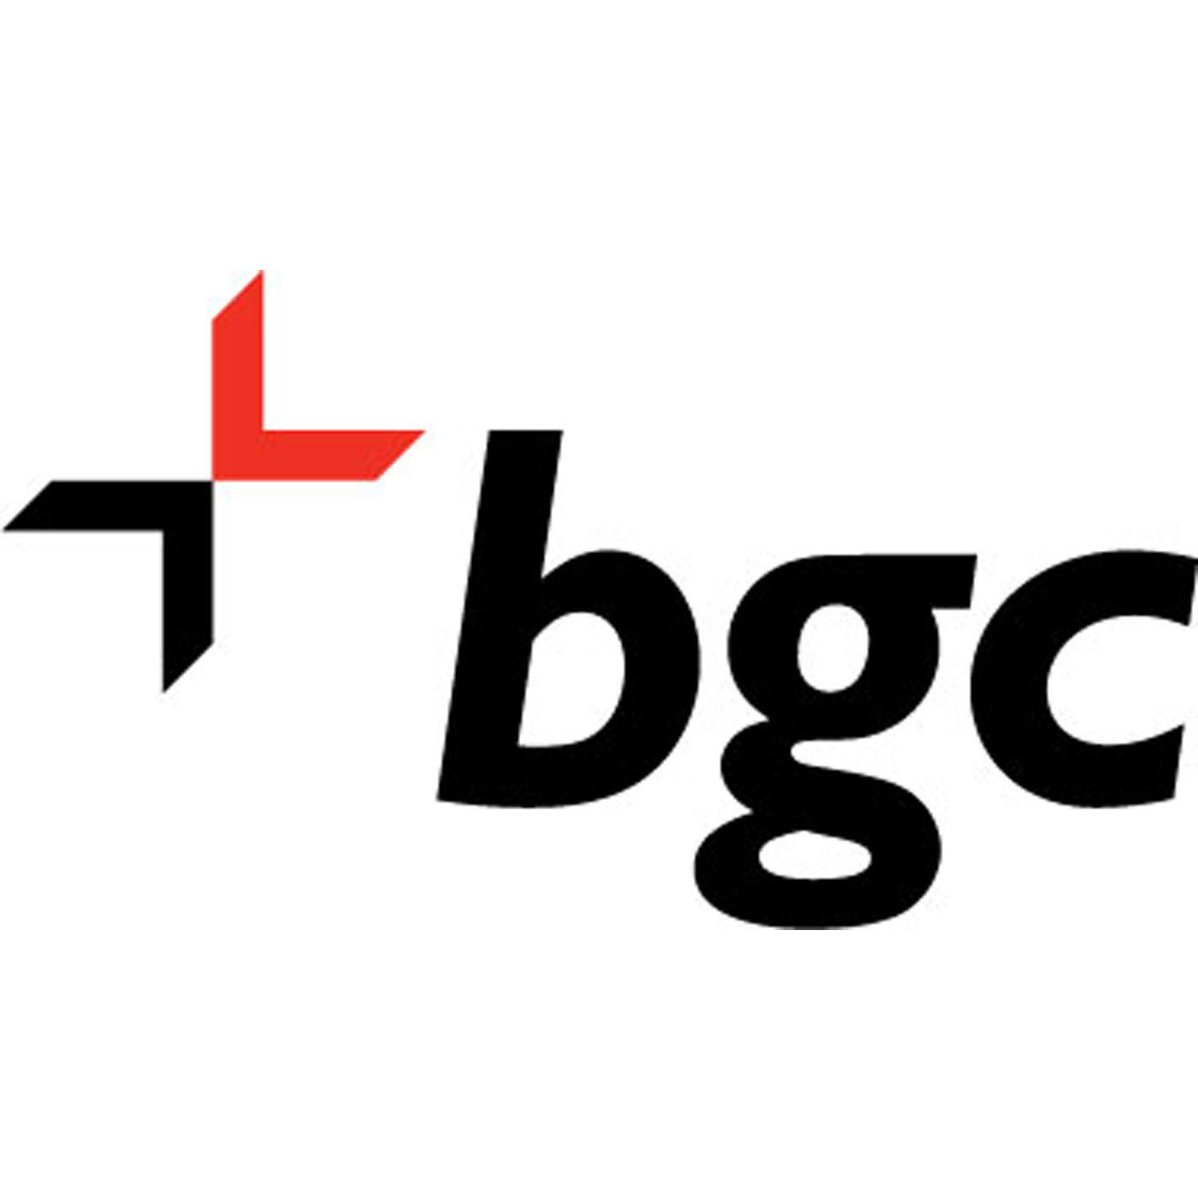 BGC ANNOUNCES PRICING OF $300 MILLION OF 4.375% SENIOR NOTES prn.to/3fe2VAr